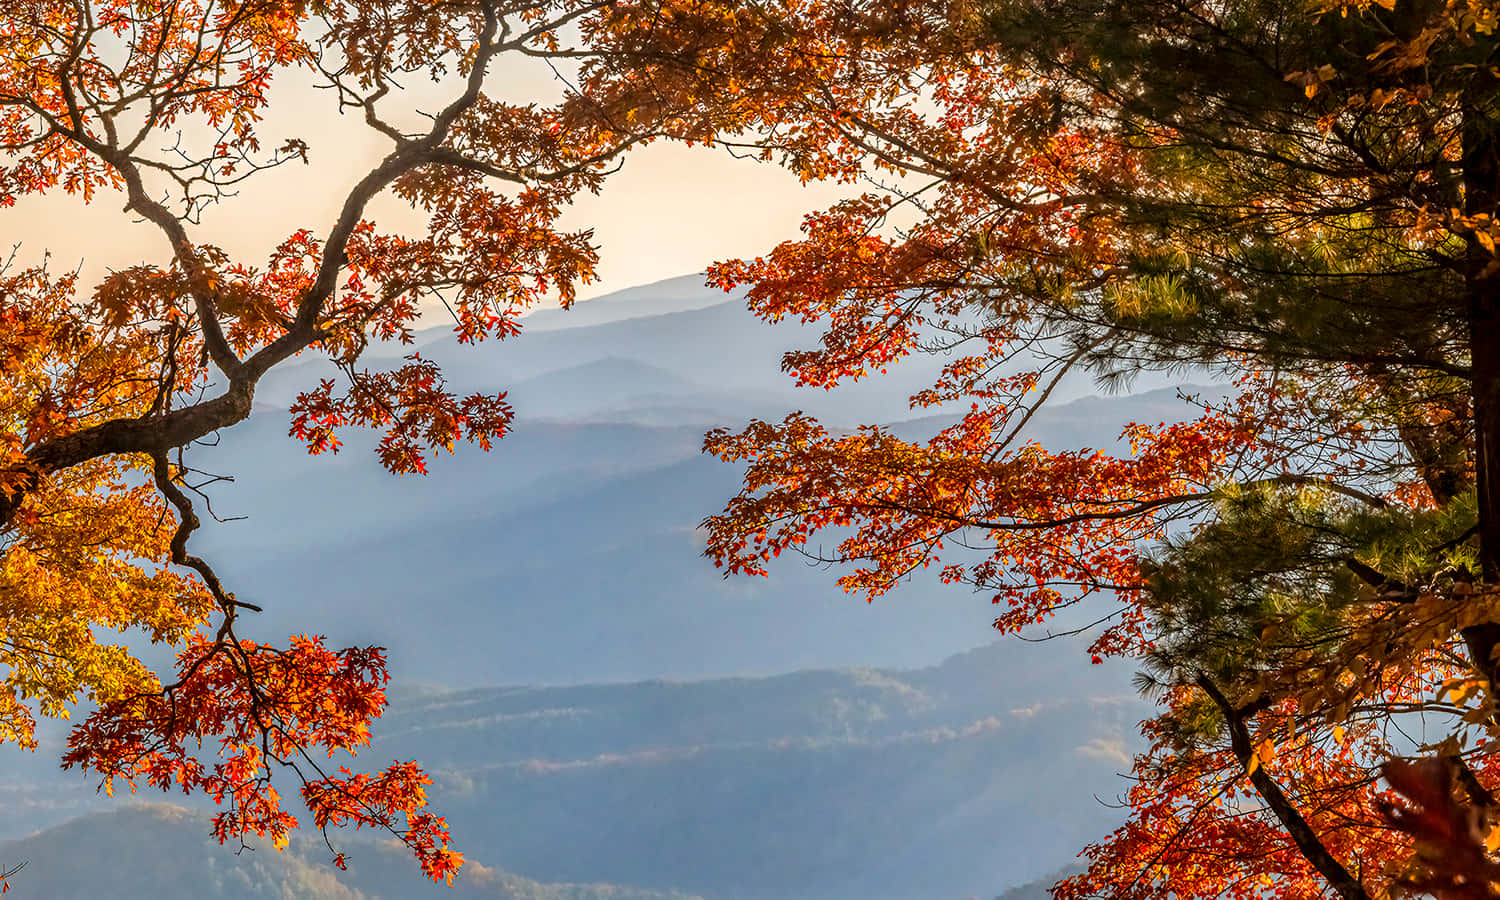 A Vibrant Fall Colors Landscape